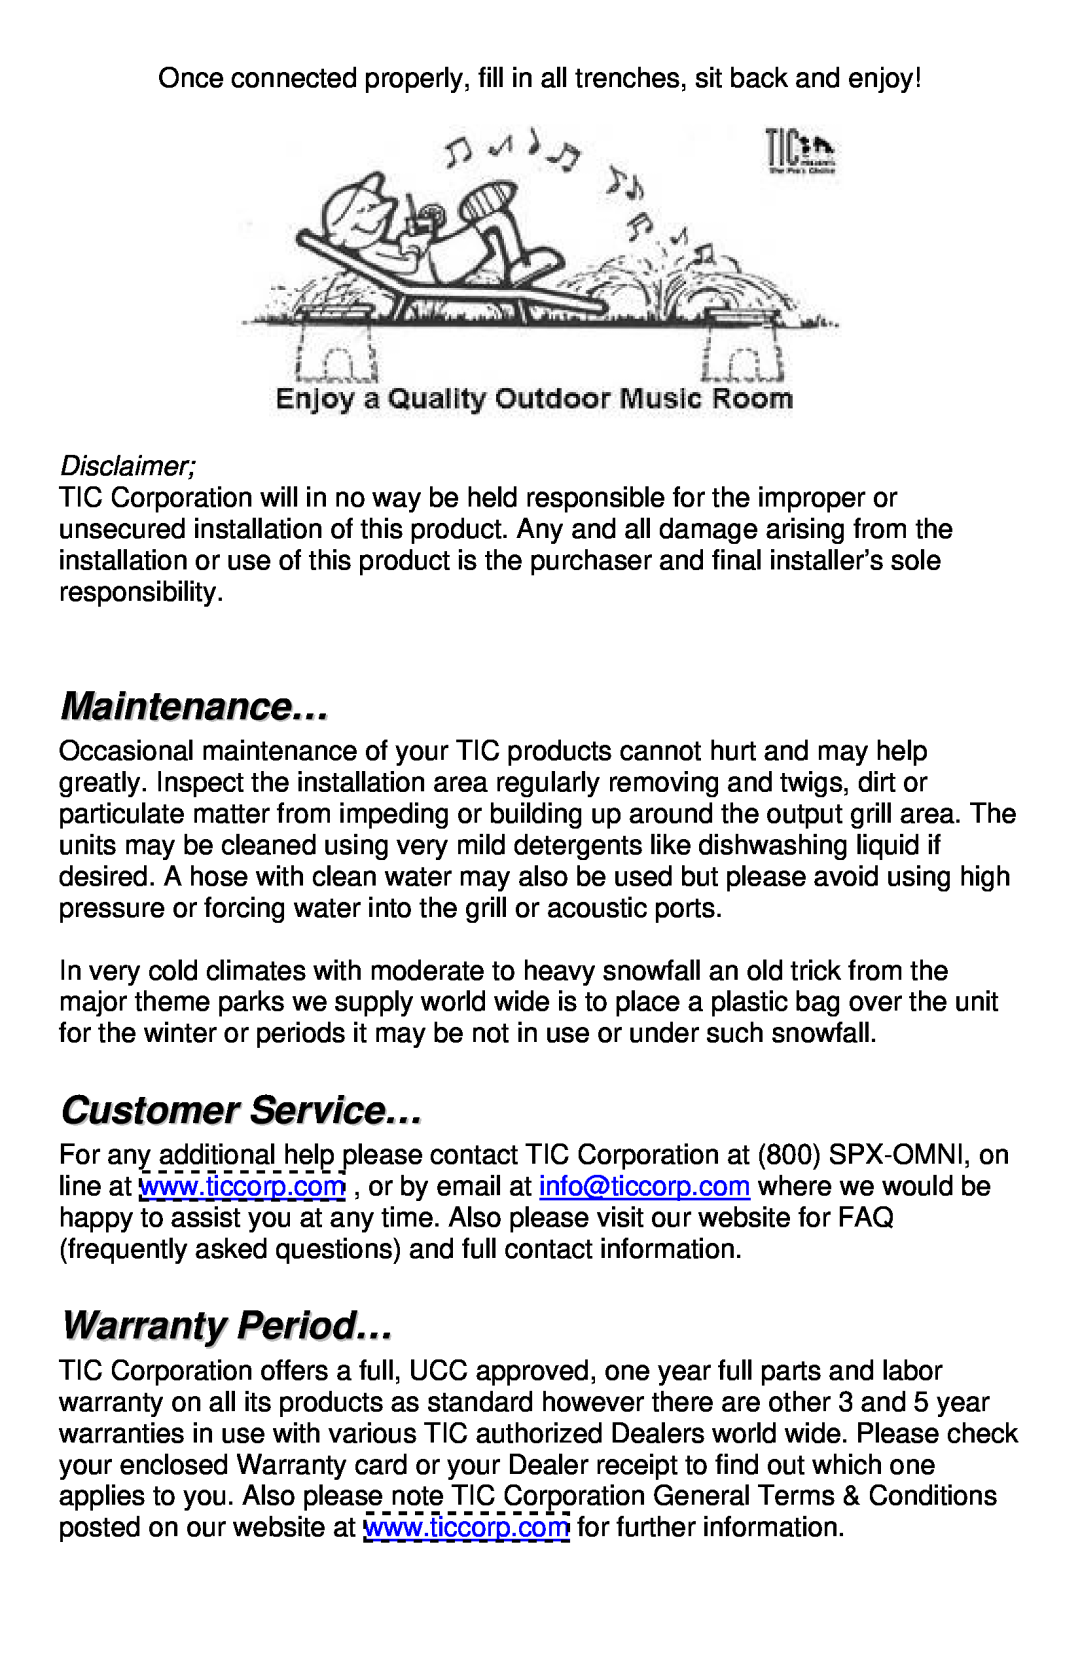 TIC GS10, GS3, GS5L, GS7 manual Maintenance…, Customer Service…, Warranty Period… 